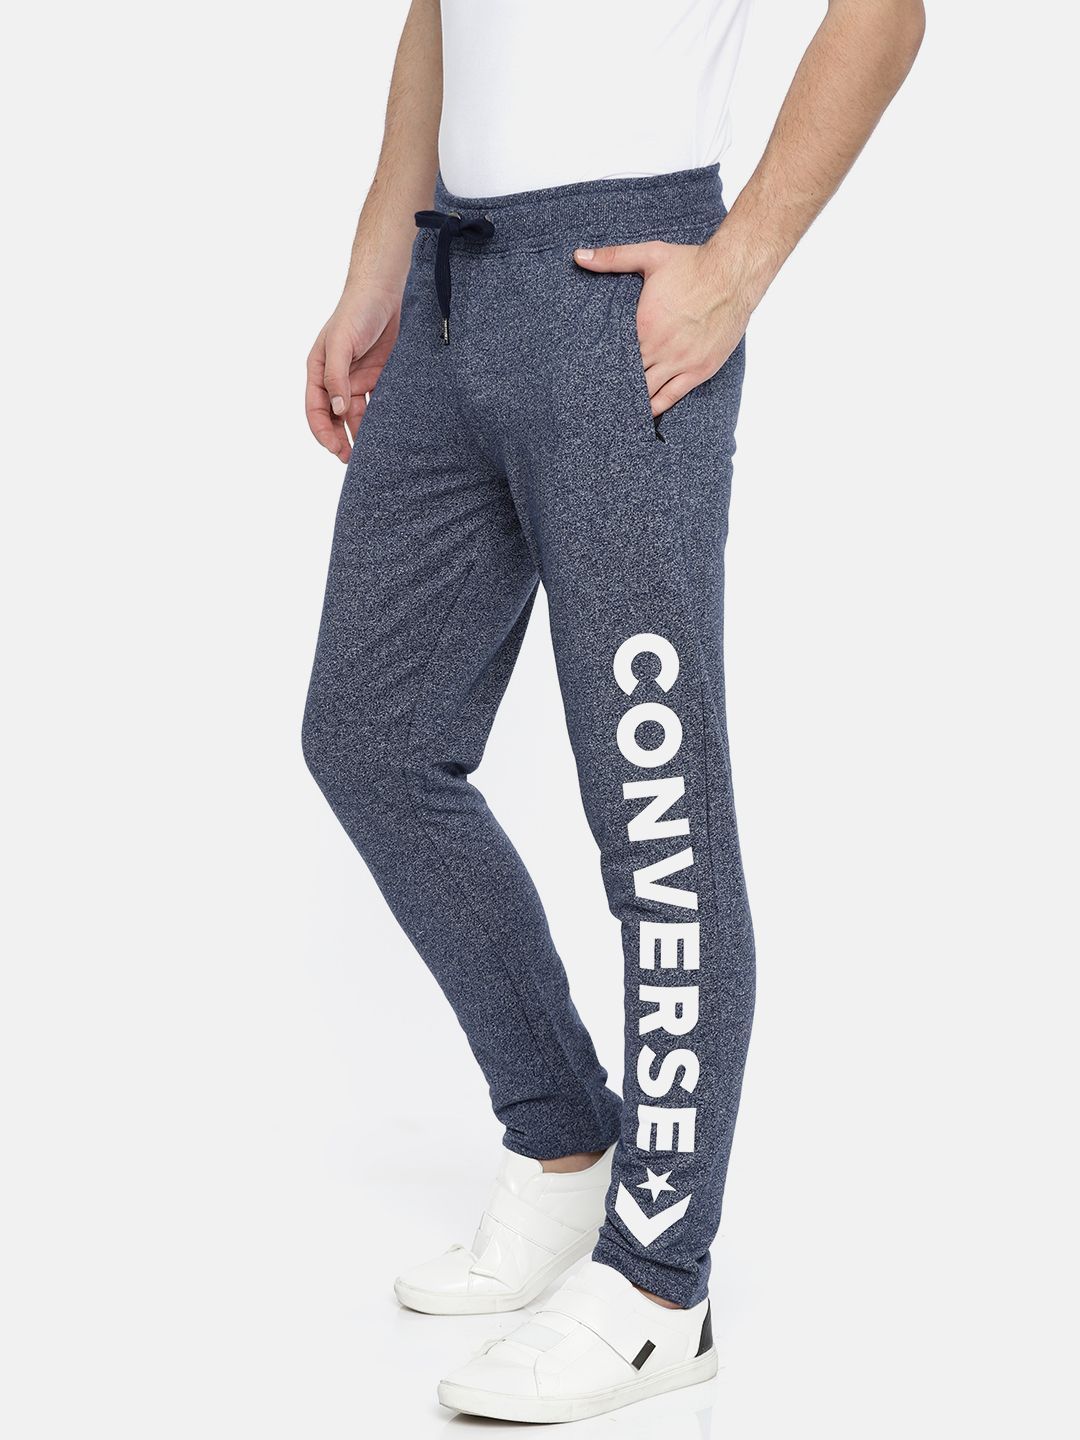 converse track pants